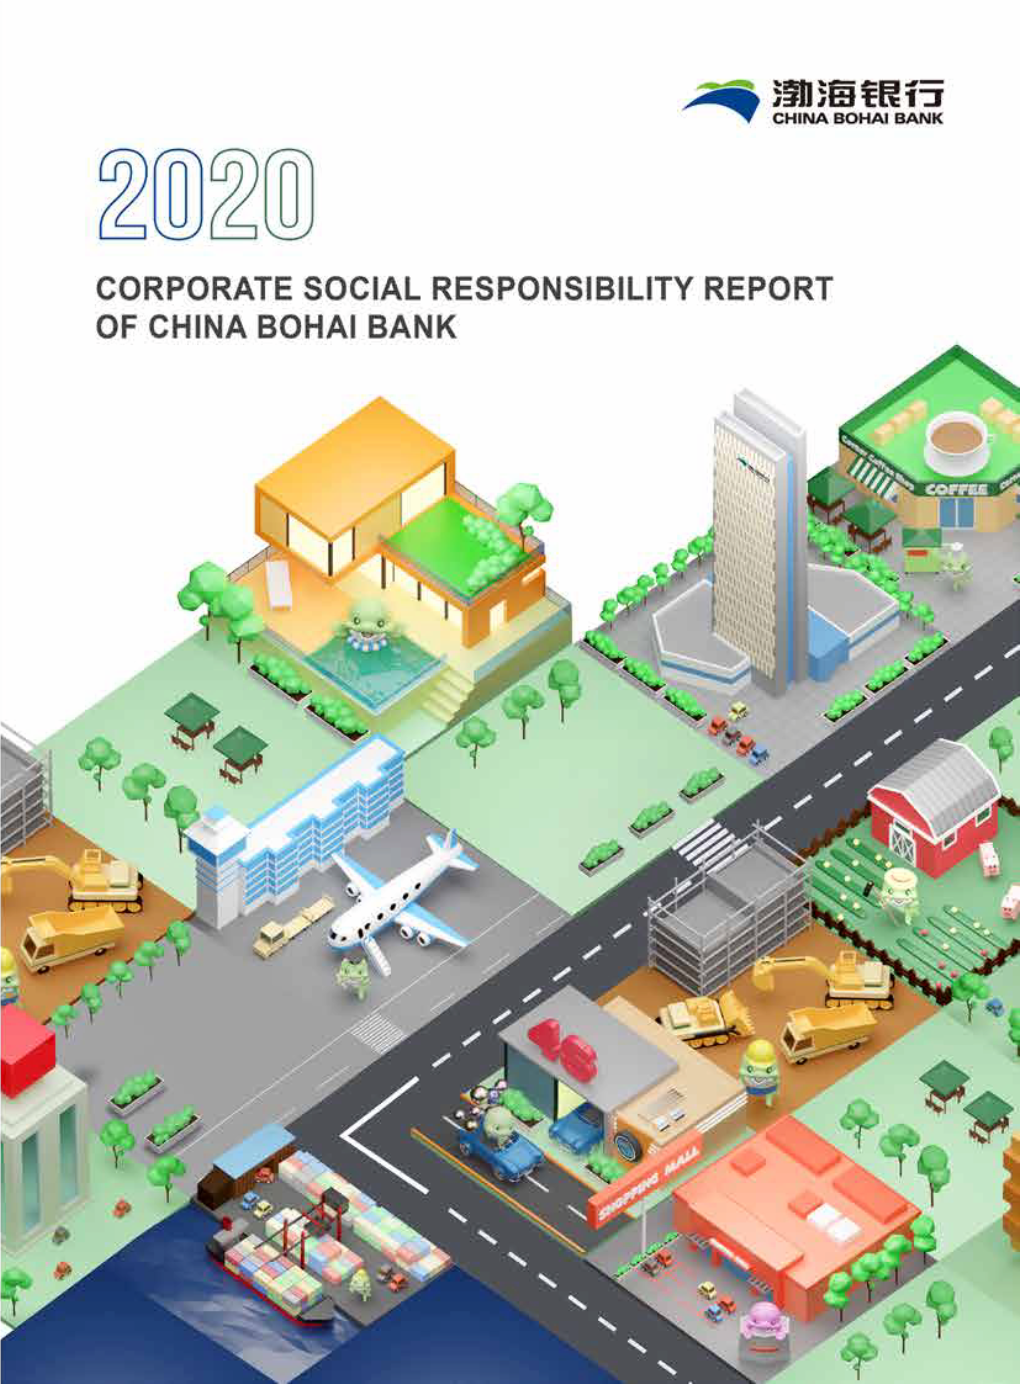 2020 Corporate Social Responsibility Report of China Bohai Bank